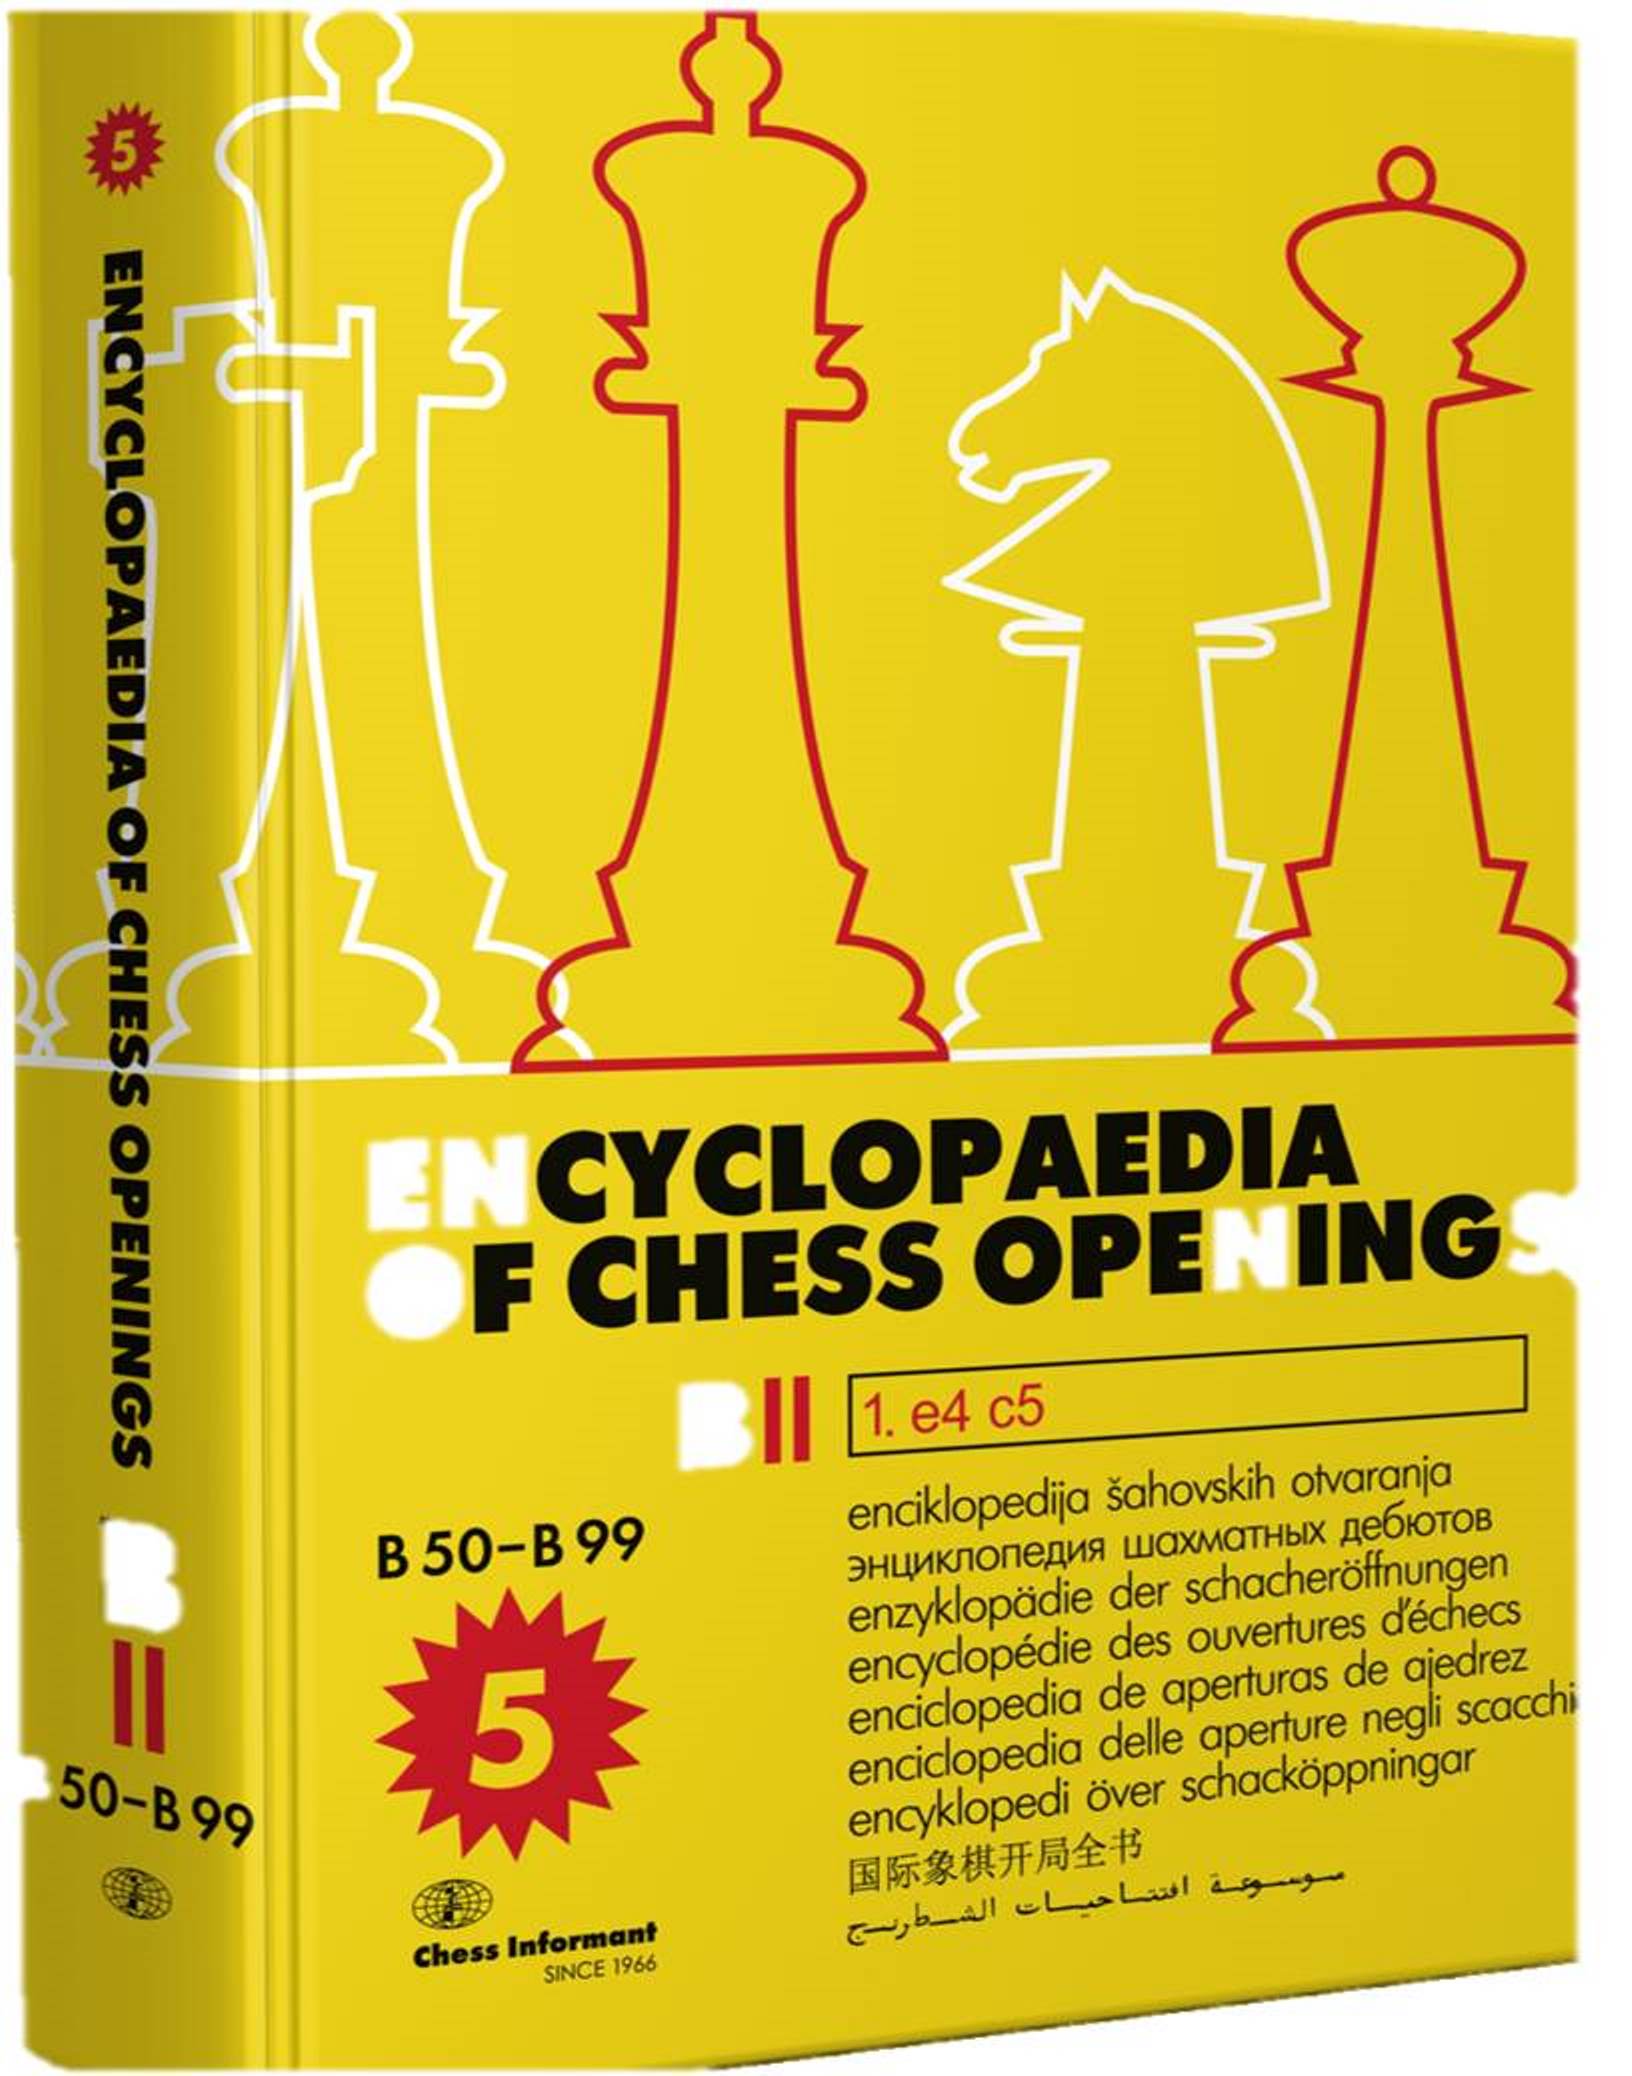 Encyclopaedia of Chess Openings BII